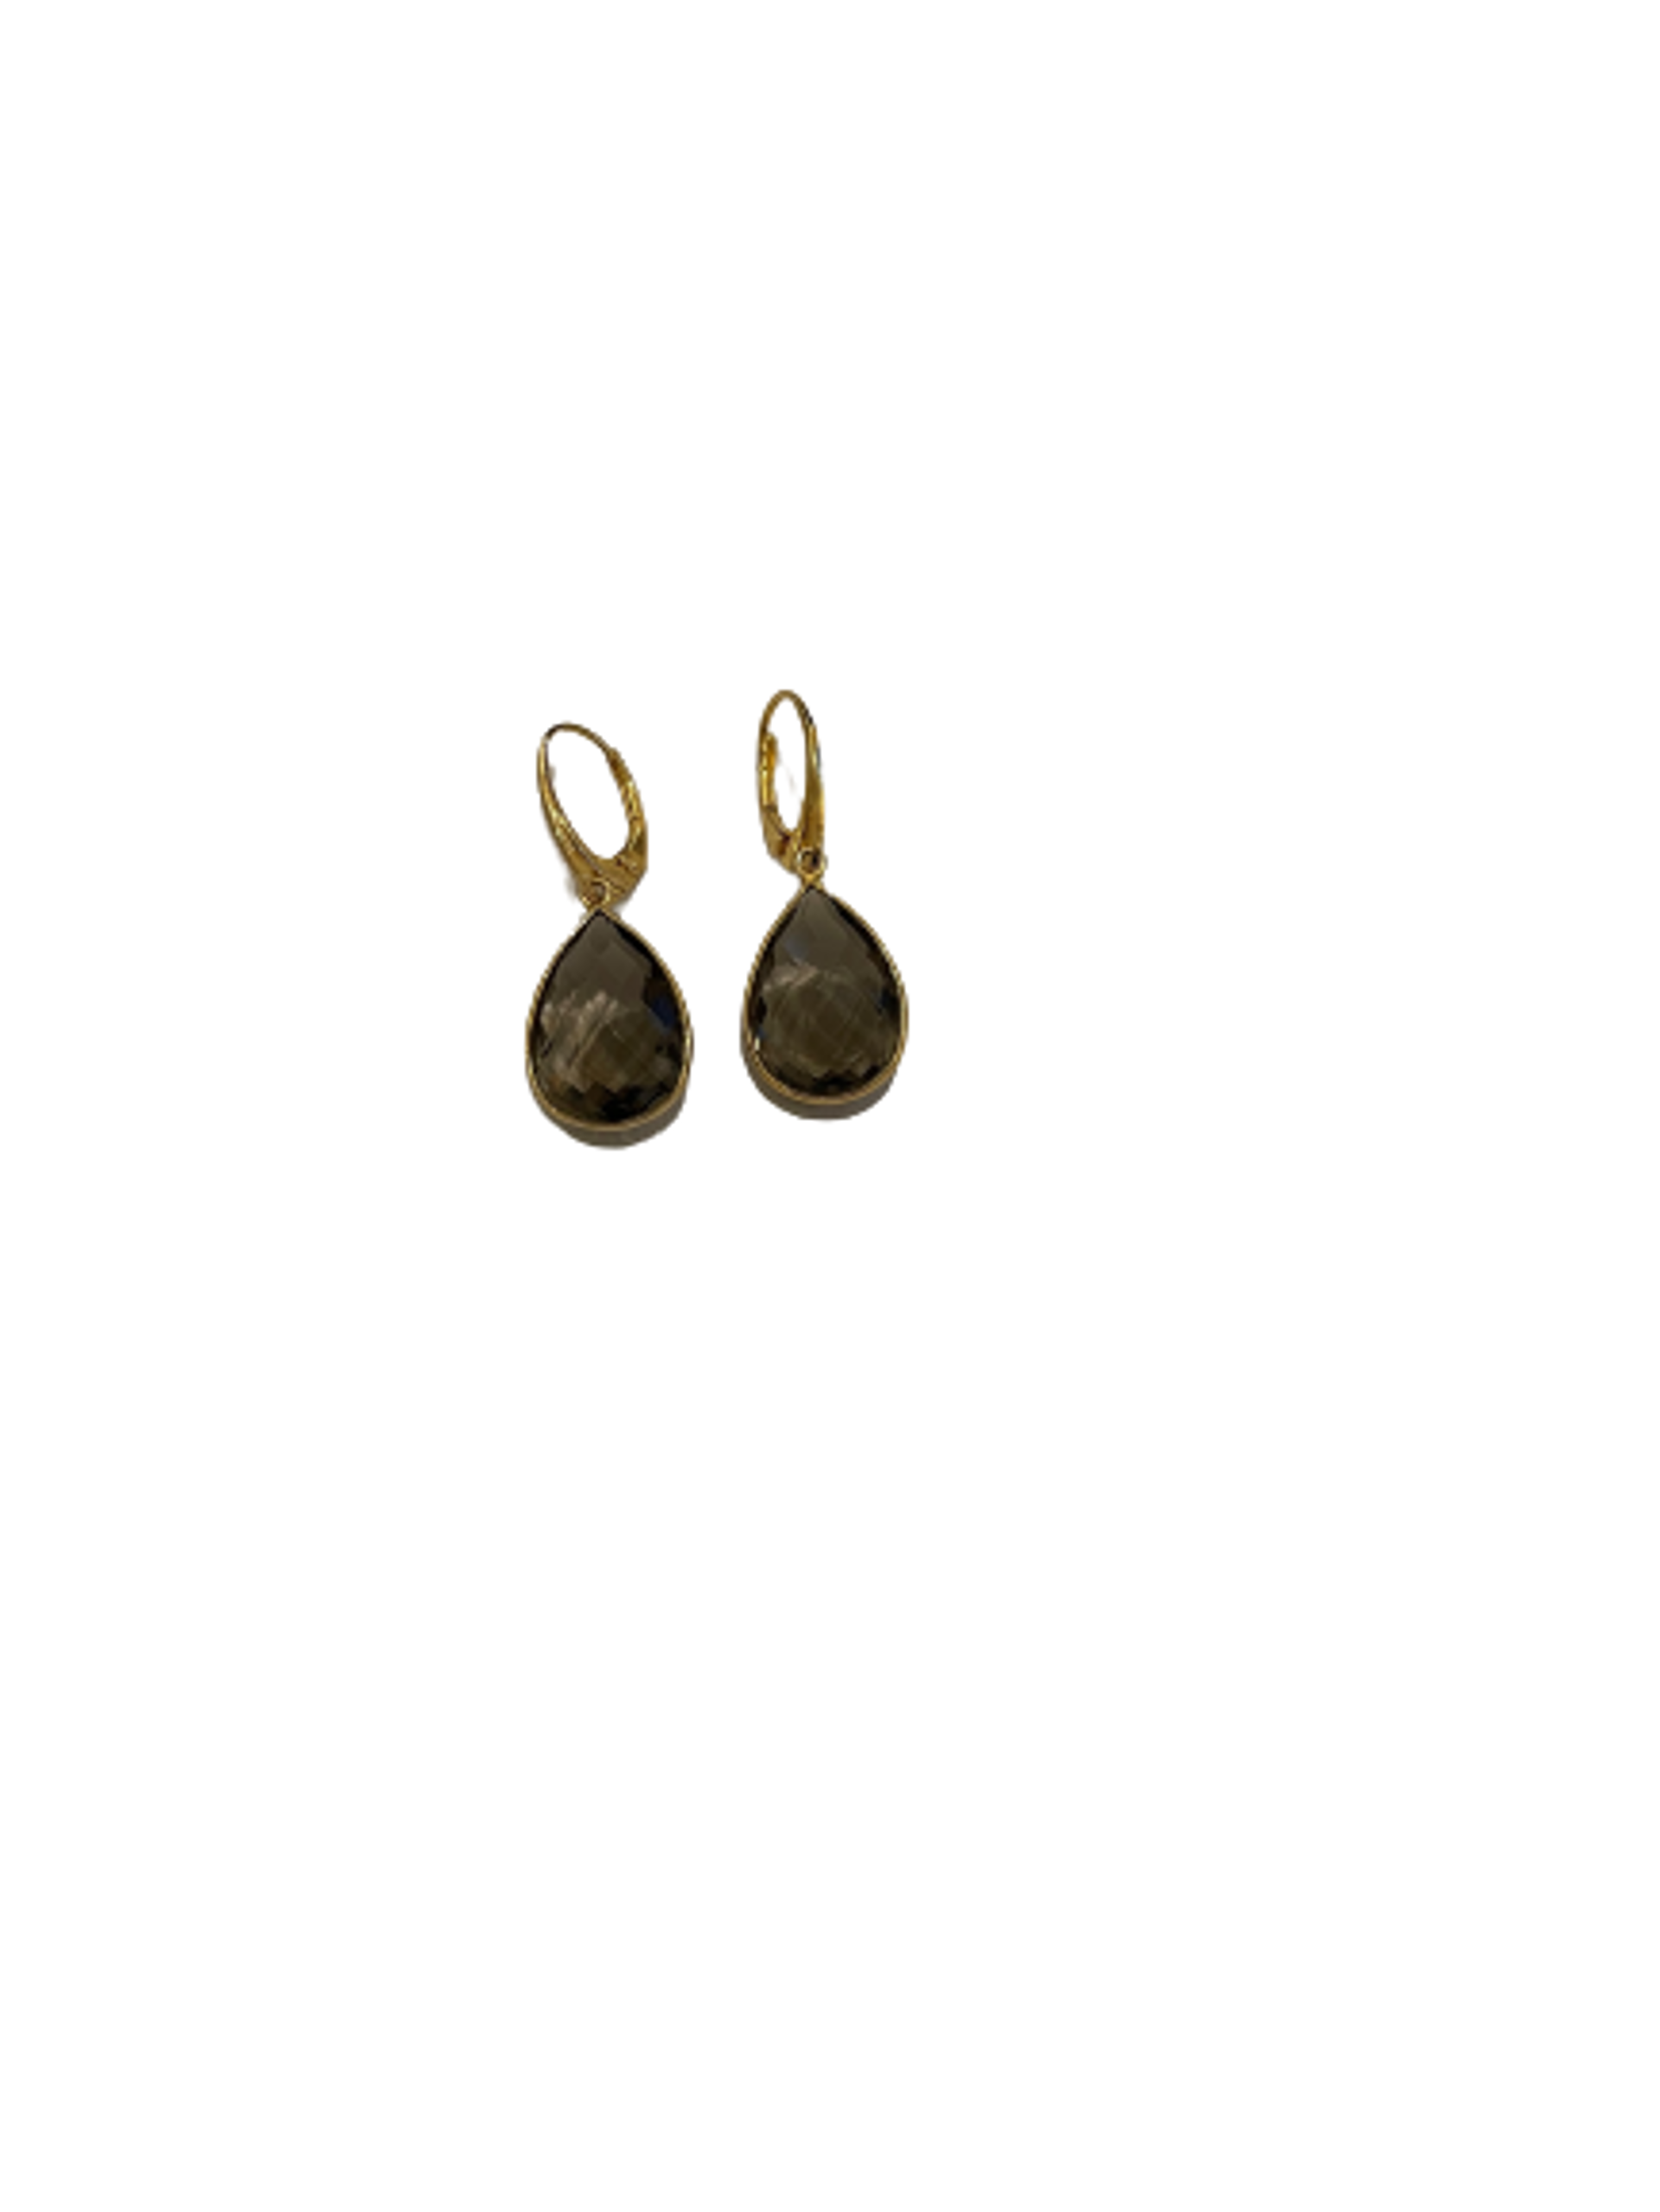 Gold Vermeil and Smokey Quartz Teardrop Earrings with Lever Backs by Karen Birchmier